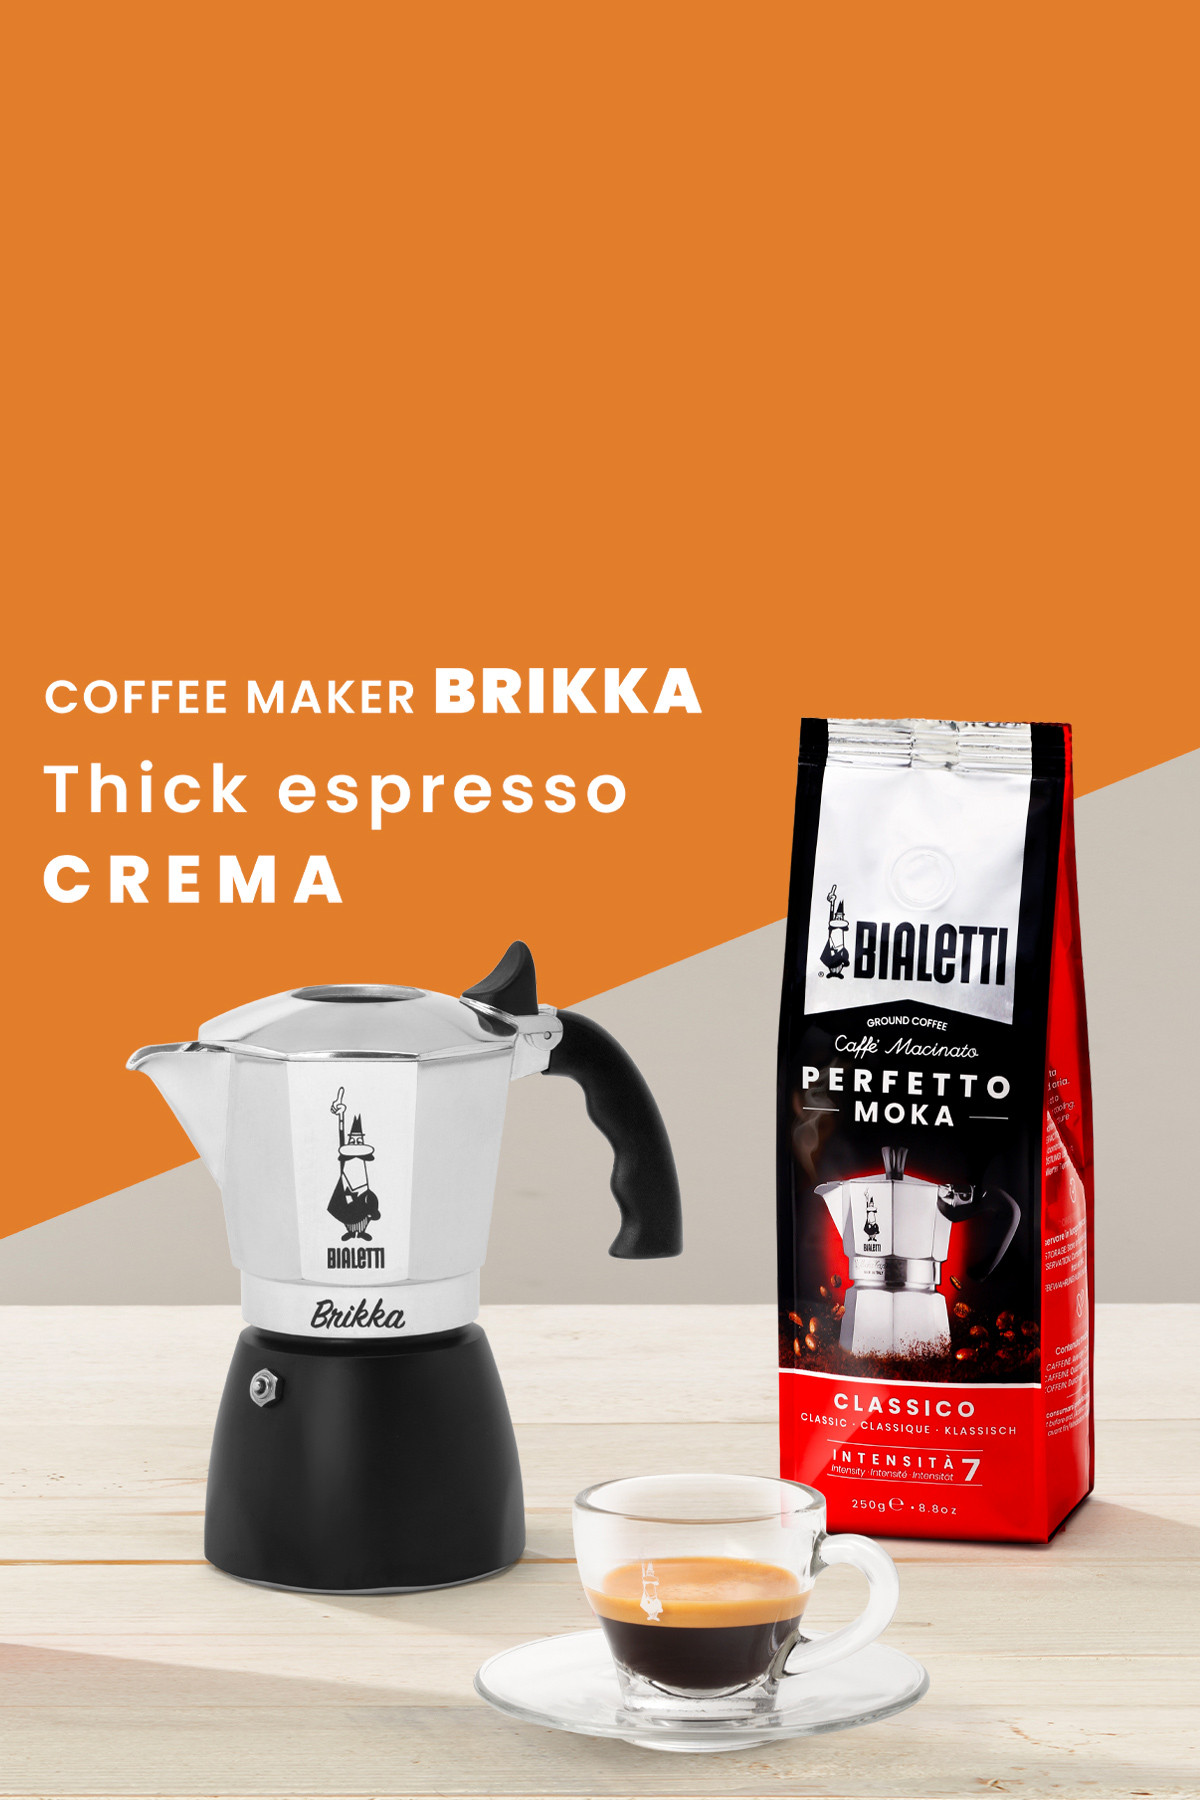 https://media.heirol.fi/587314_7/1200/bialetti-brikka-4-cups-new_.jpg